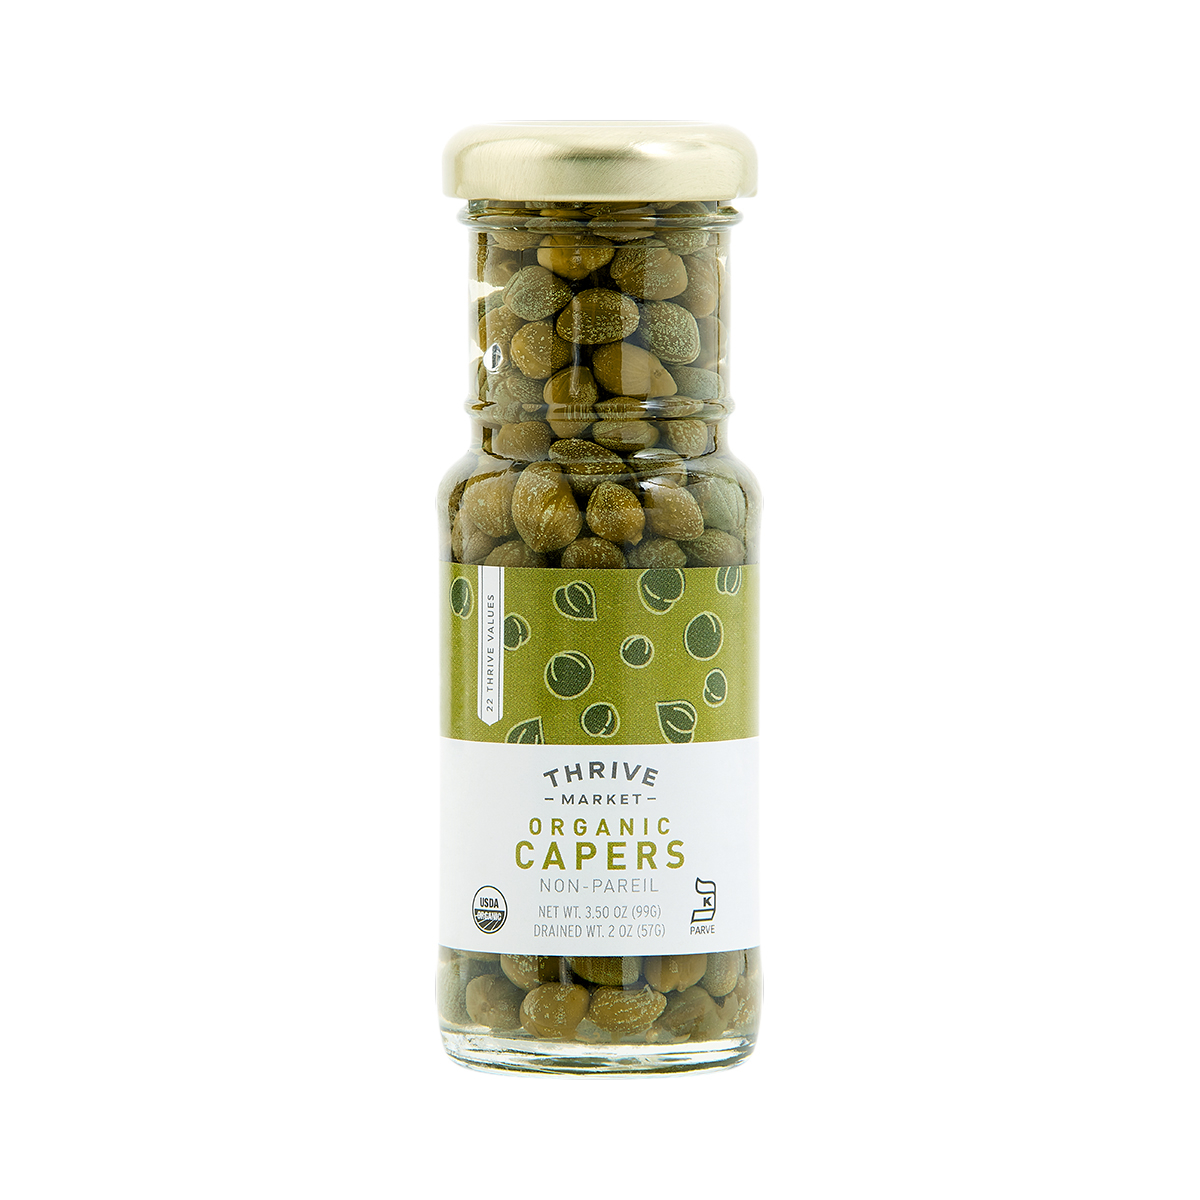 Thrive Market Organic Non-Pareil Capers 2 oz glass jar